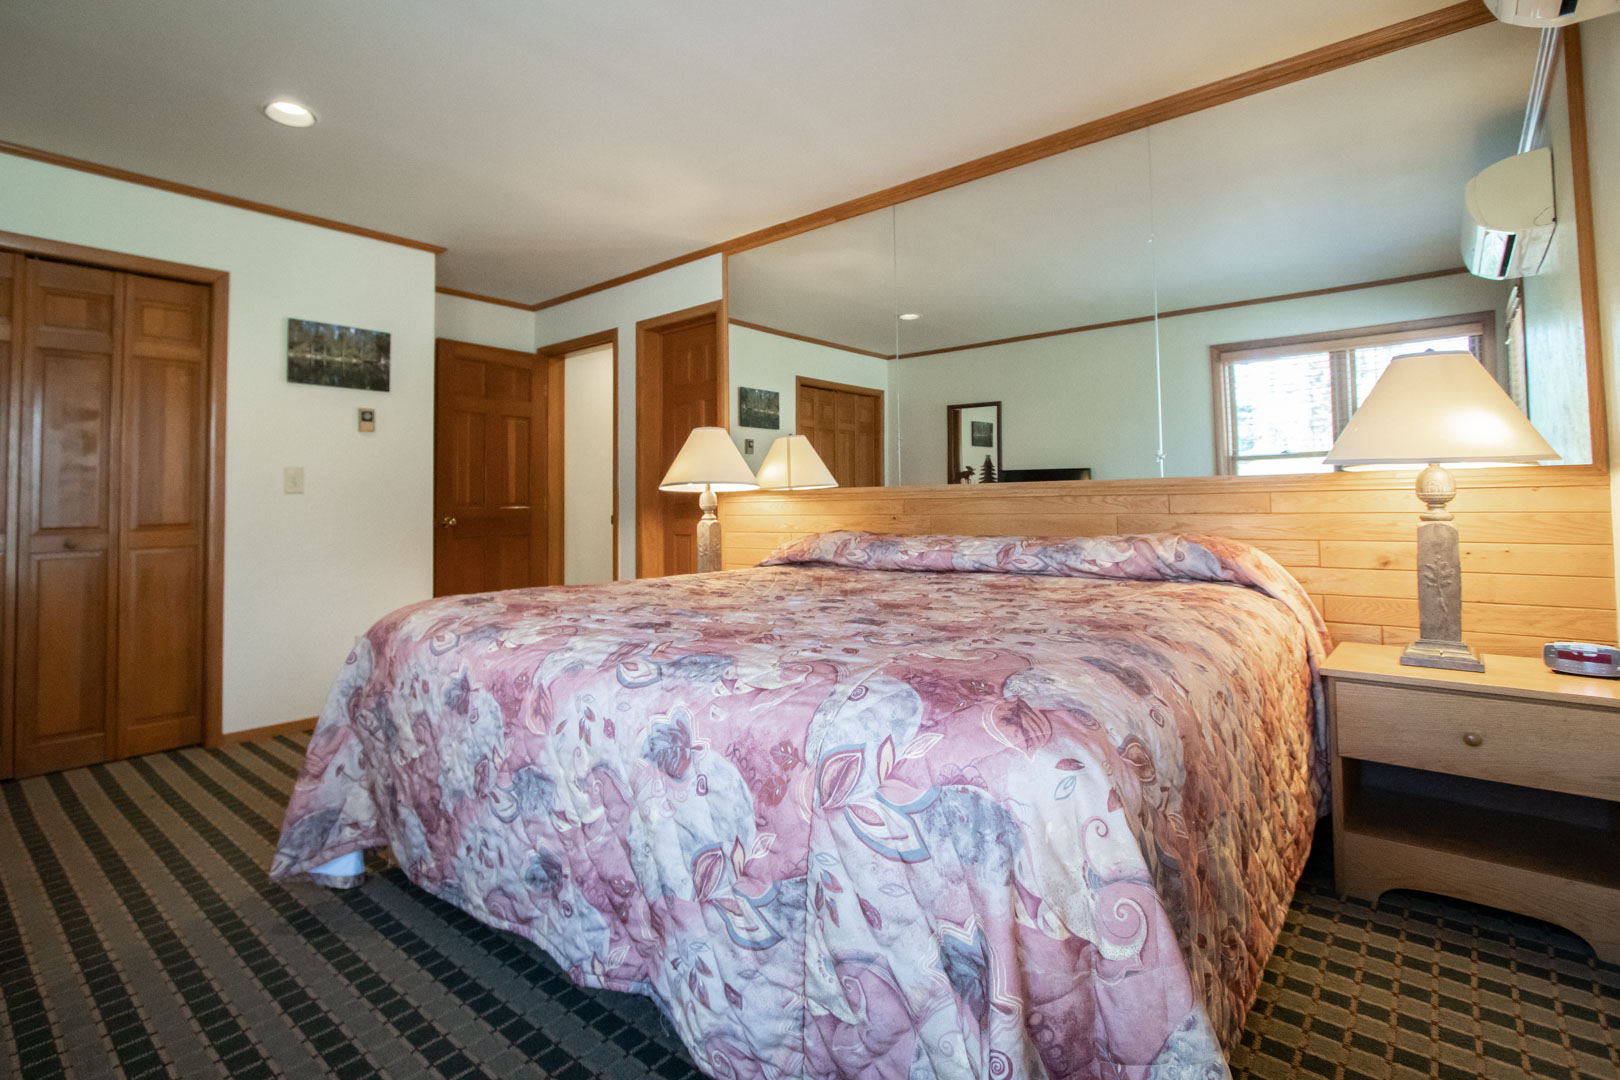 A spacious master bedroom at VRI's Sunburst Resort in Steamboat Springs, Colorado.